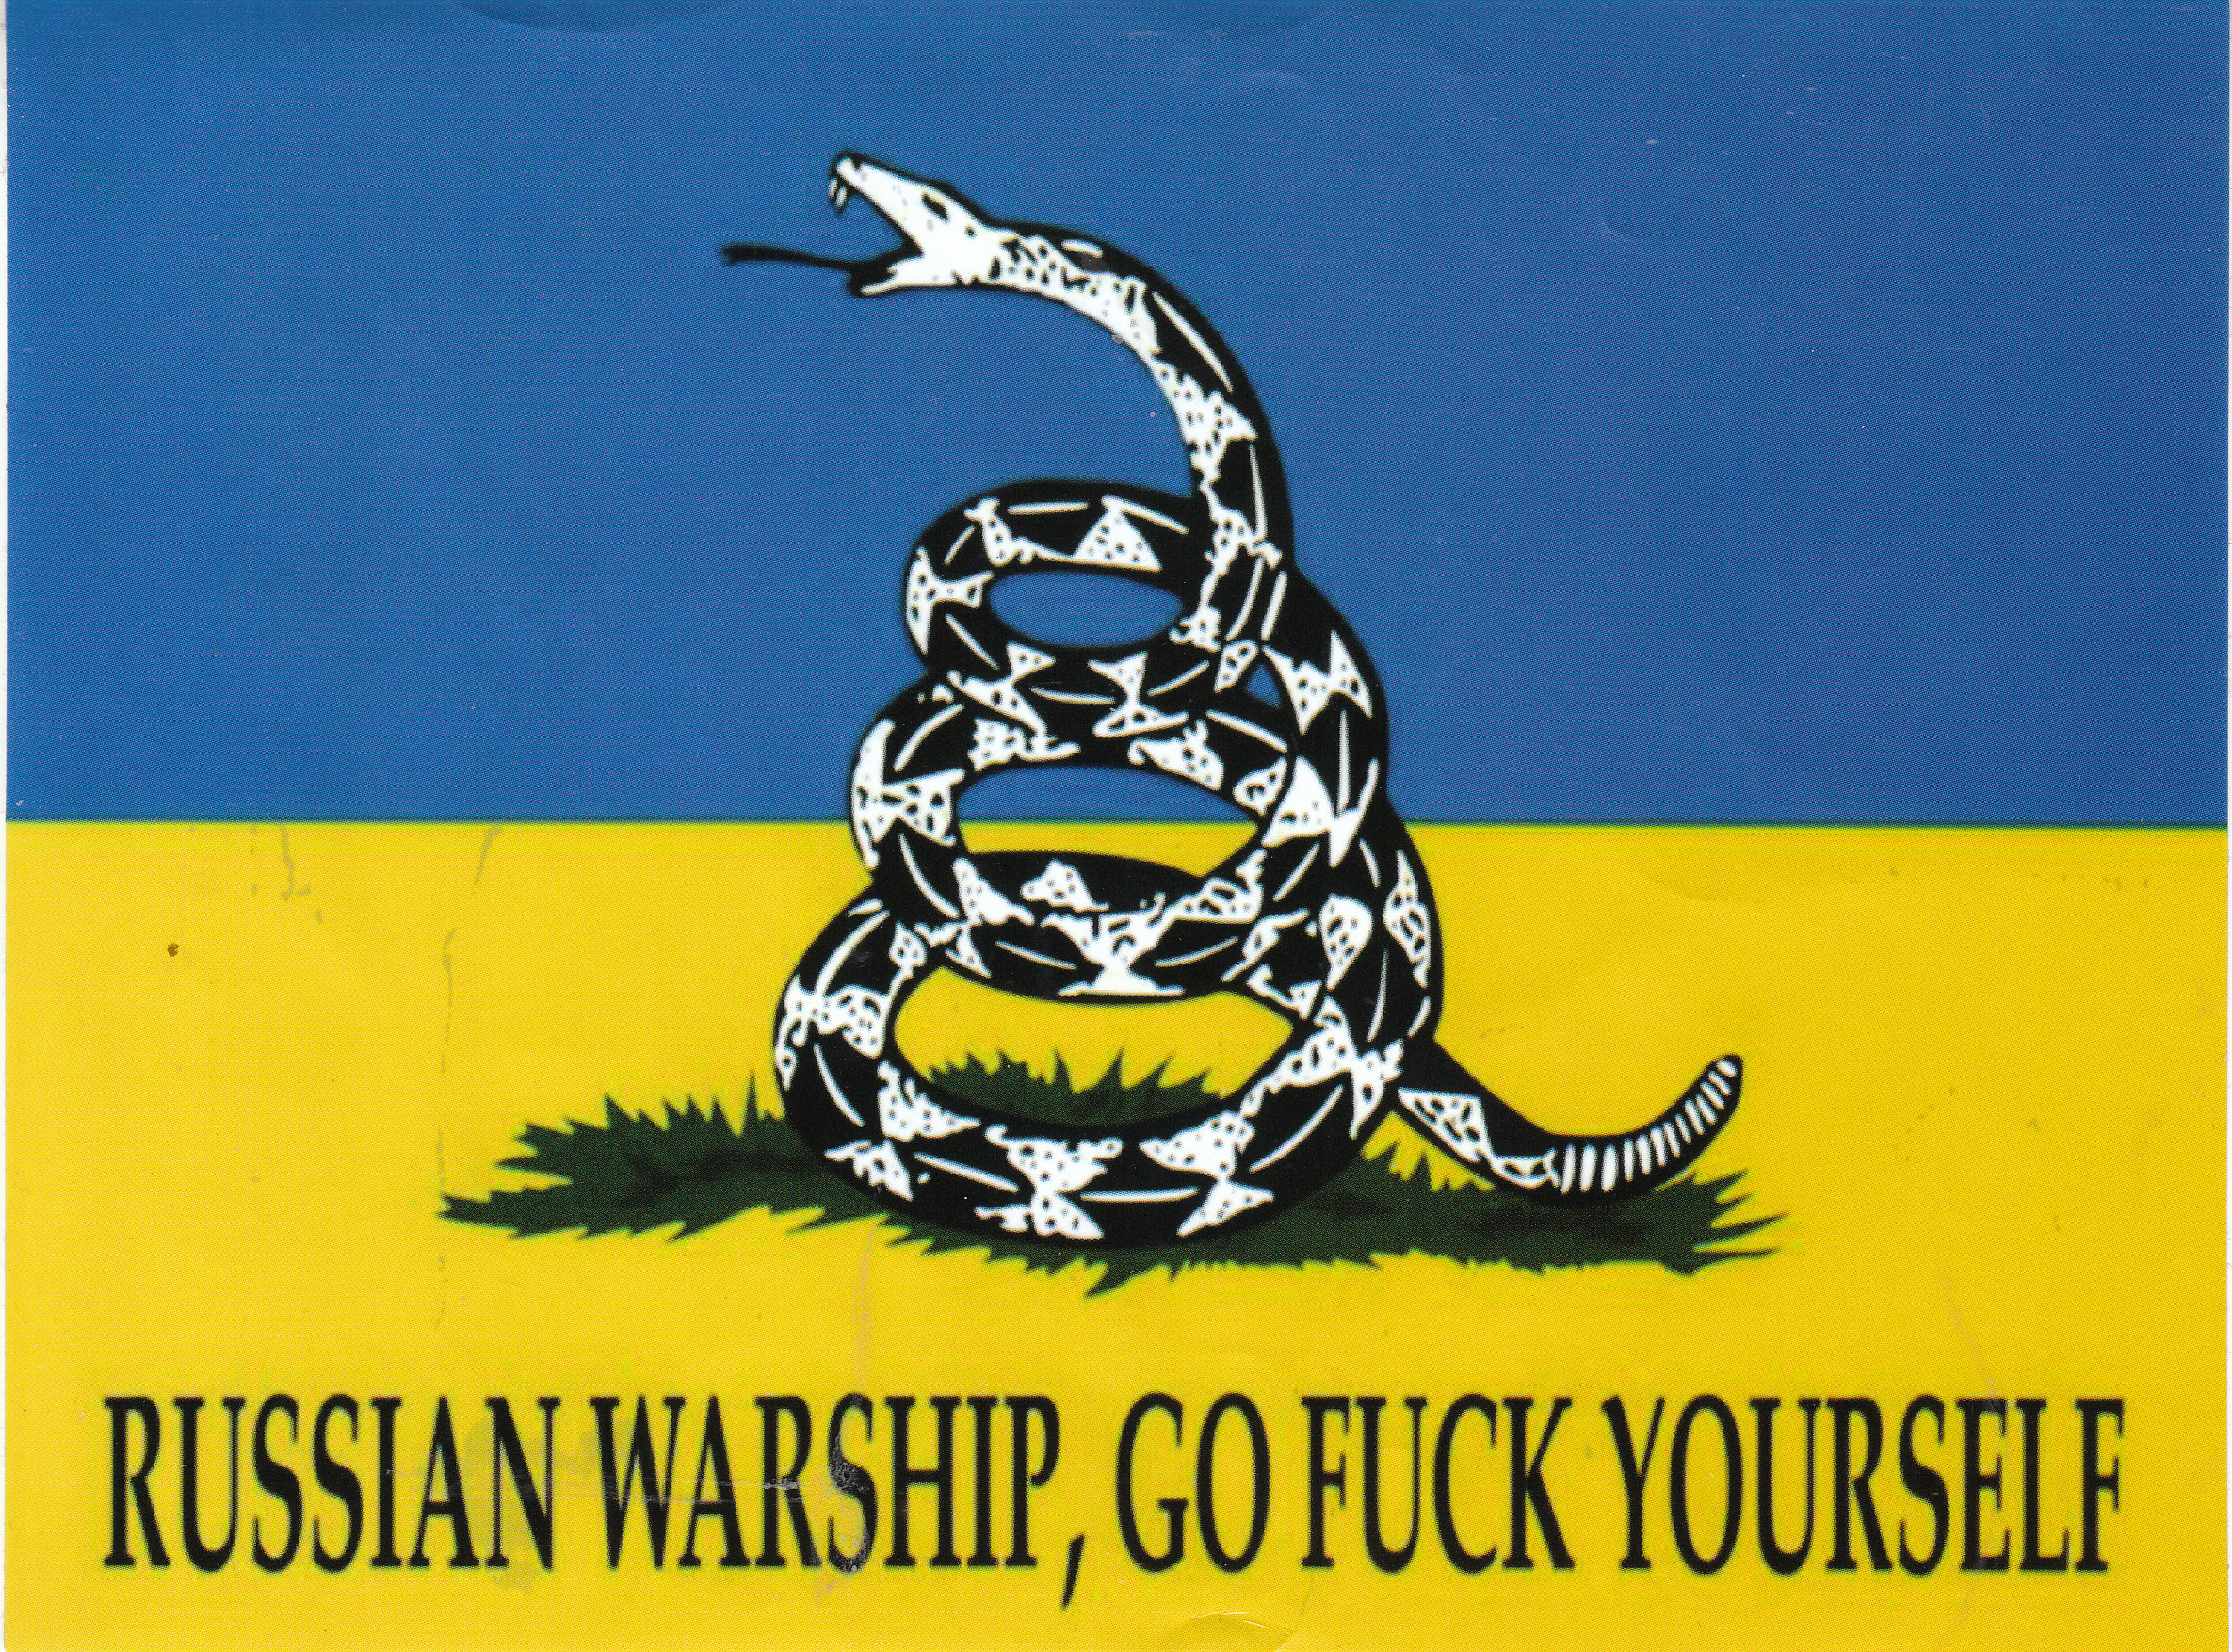 Rissian Warship go fuck yourself